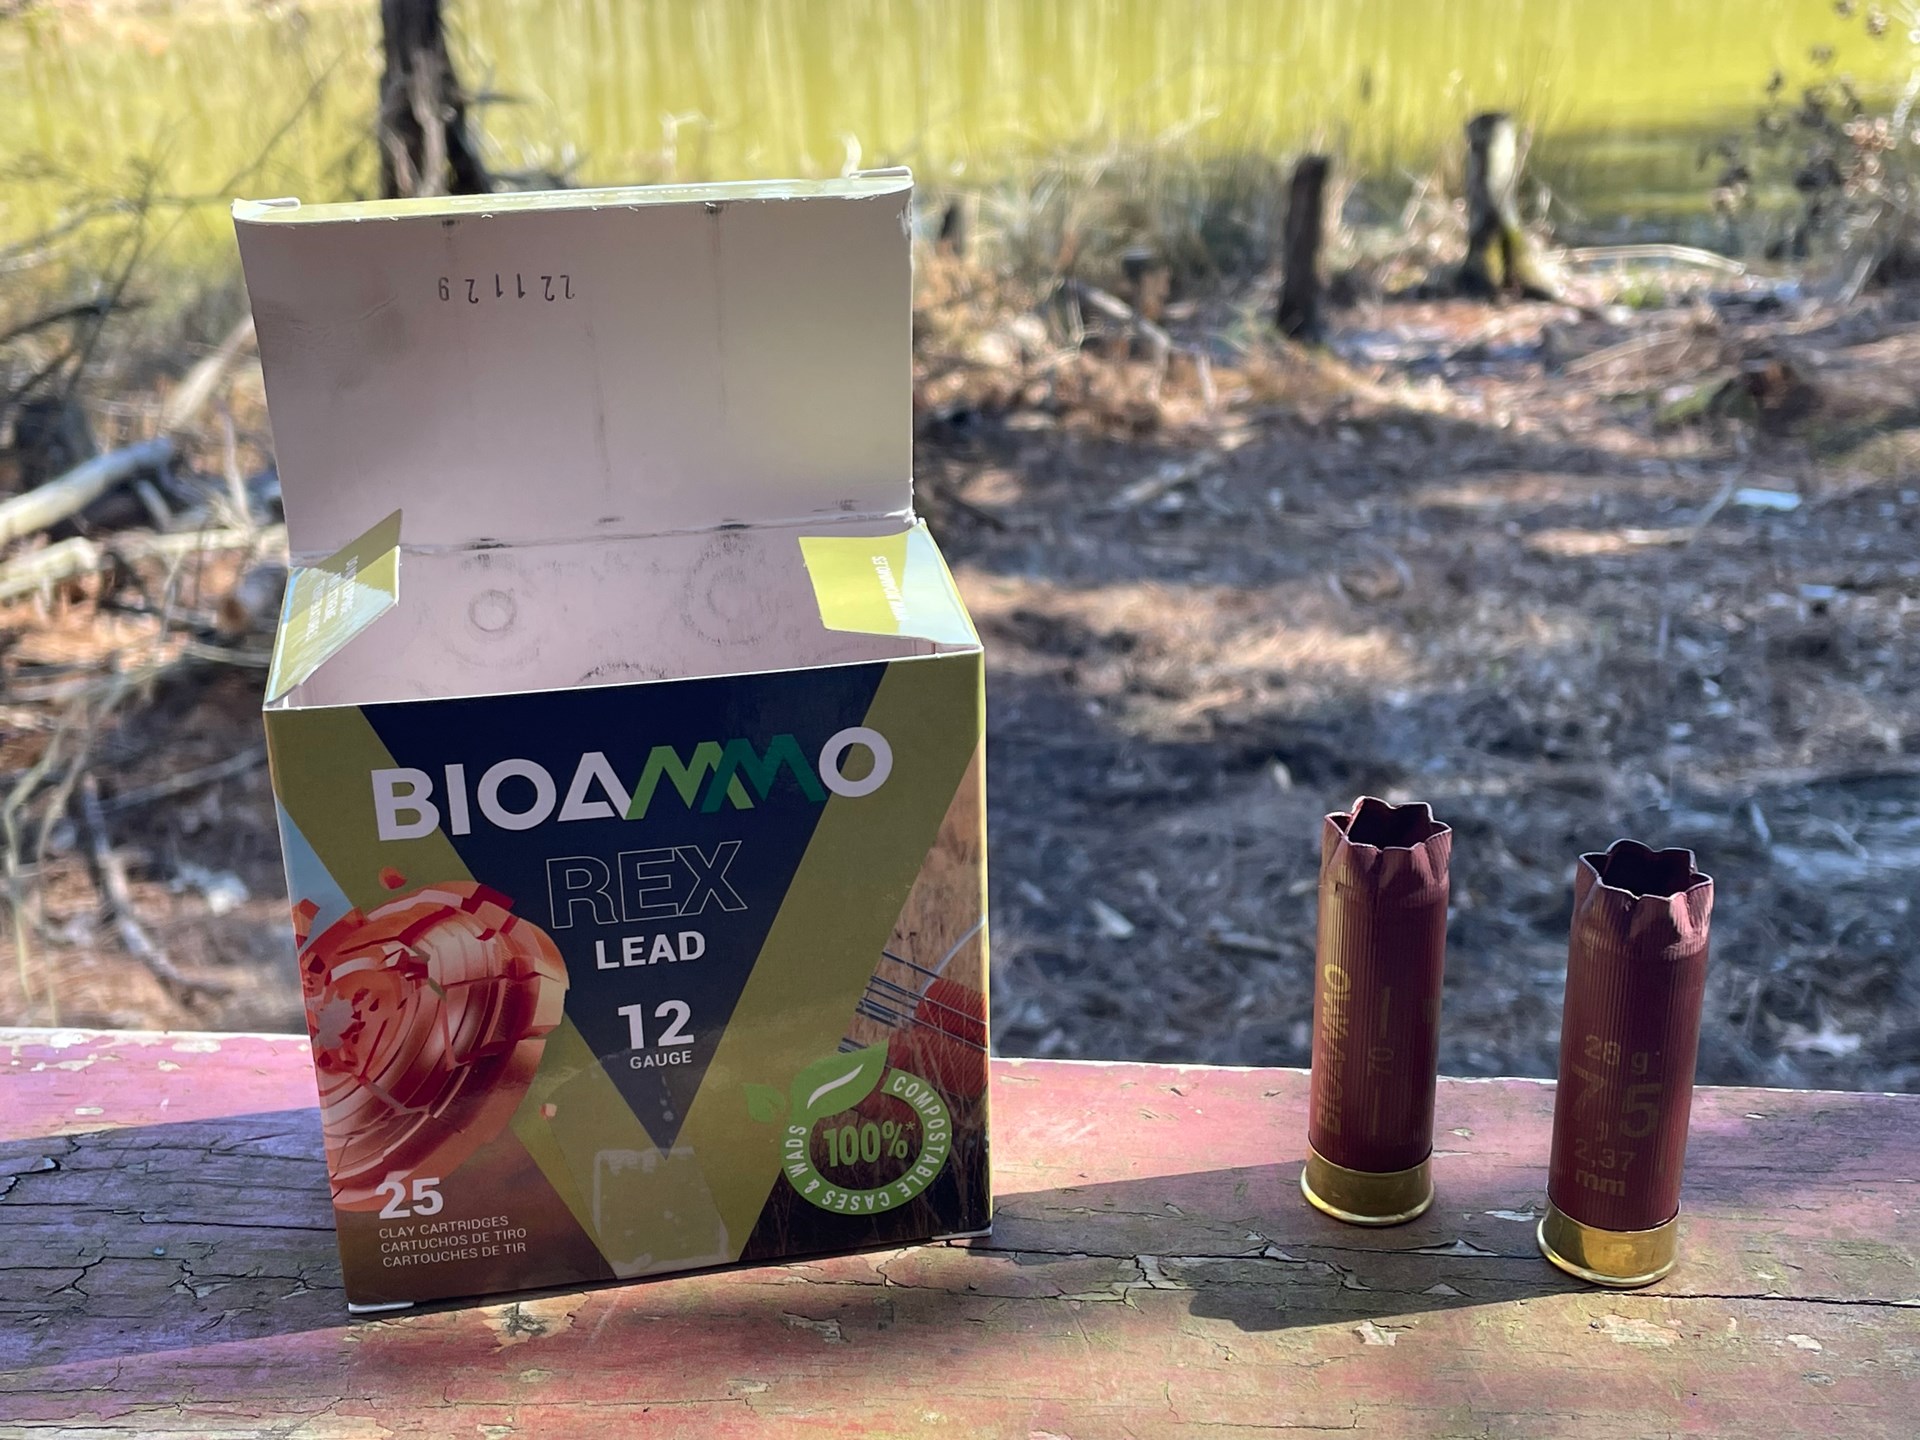 BIOAMMO REX LEAD text on shotshell ammunition box two spent hulls outdoors stumps grass background